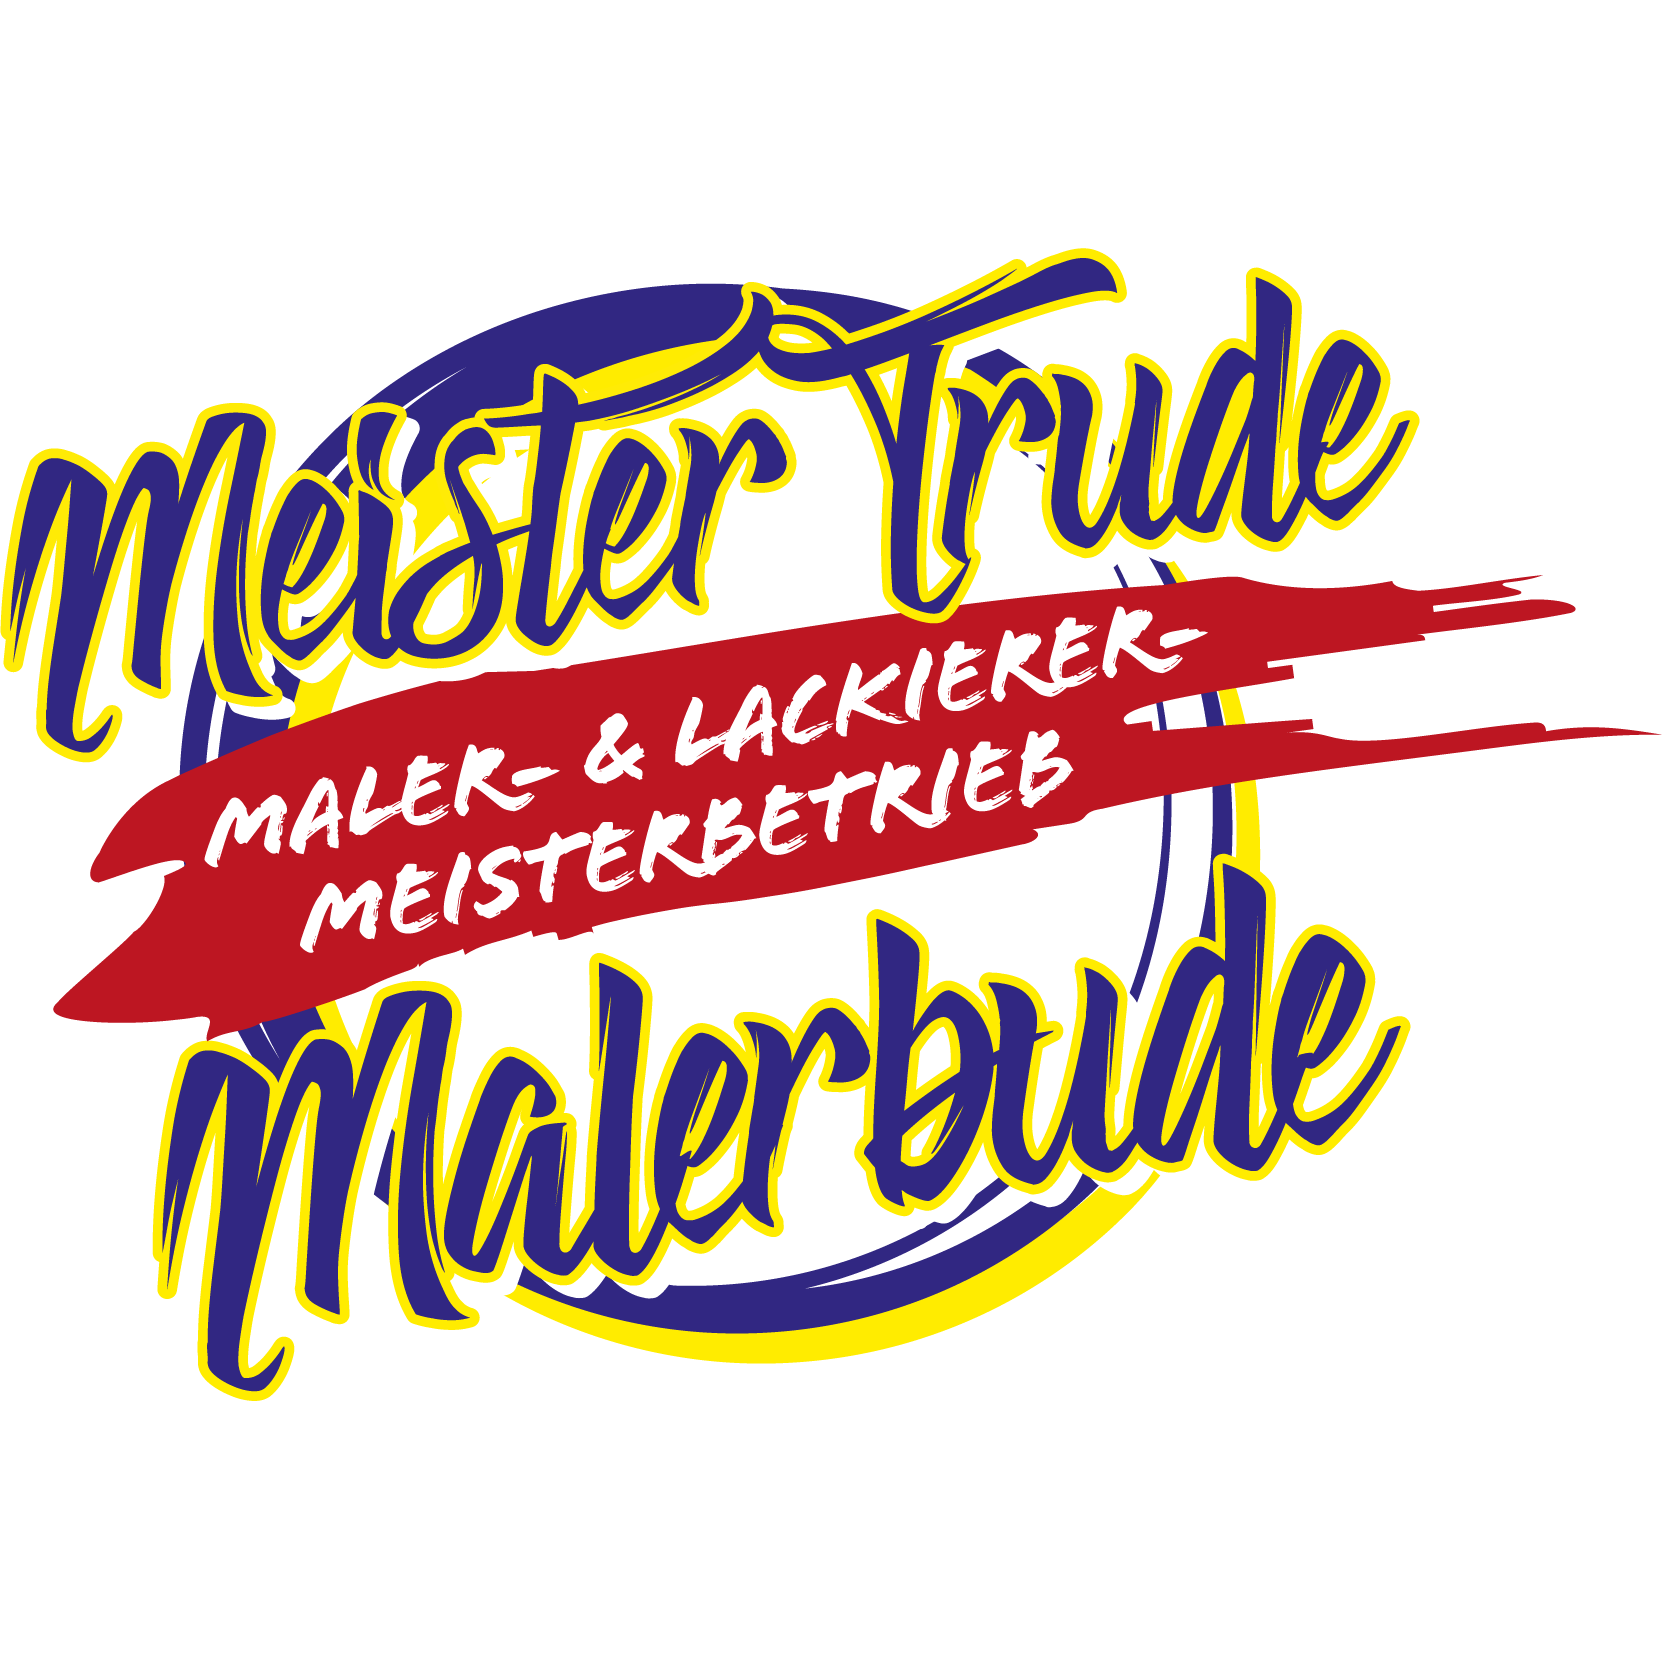 Kundenlogo Meister Trude Malerbude